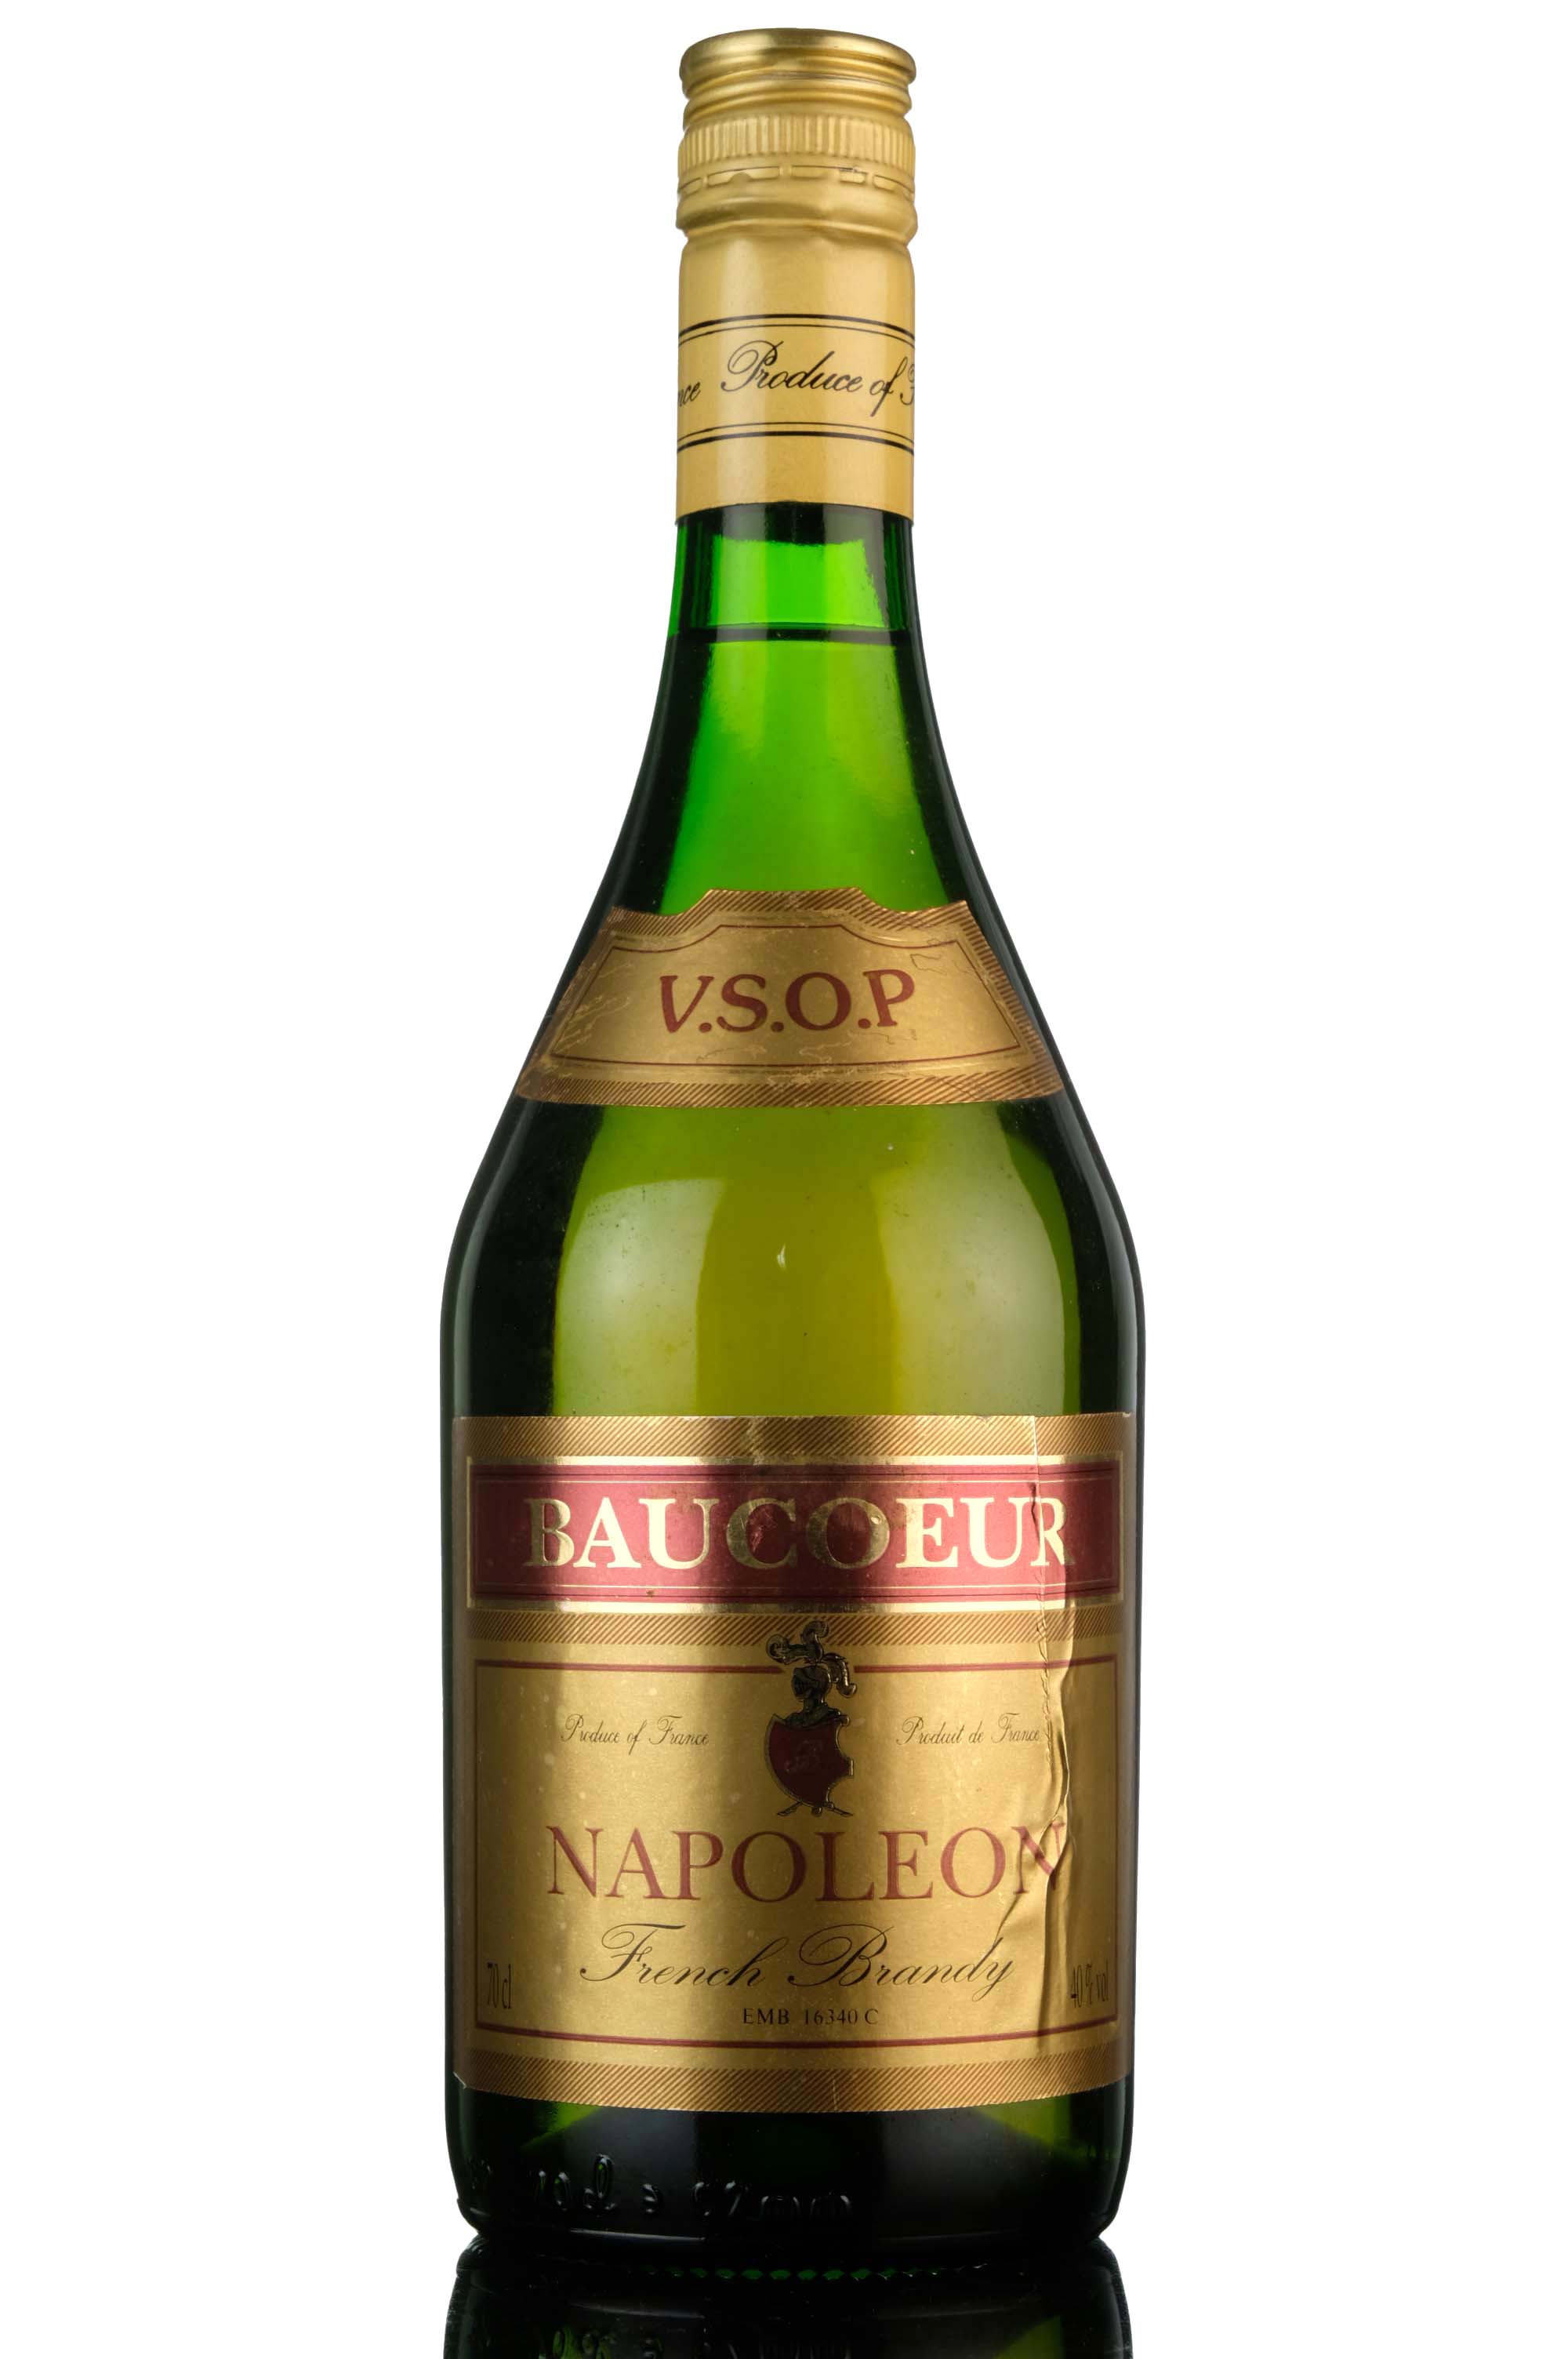 Baucoeur VSOP Napoleon Brandy